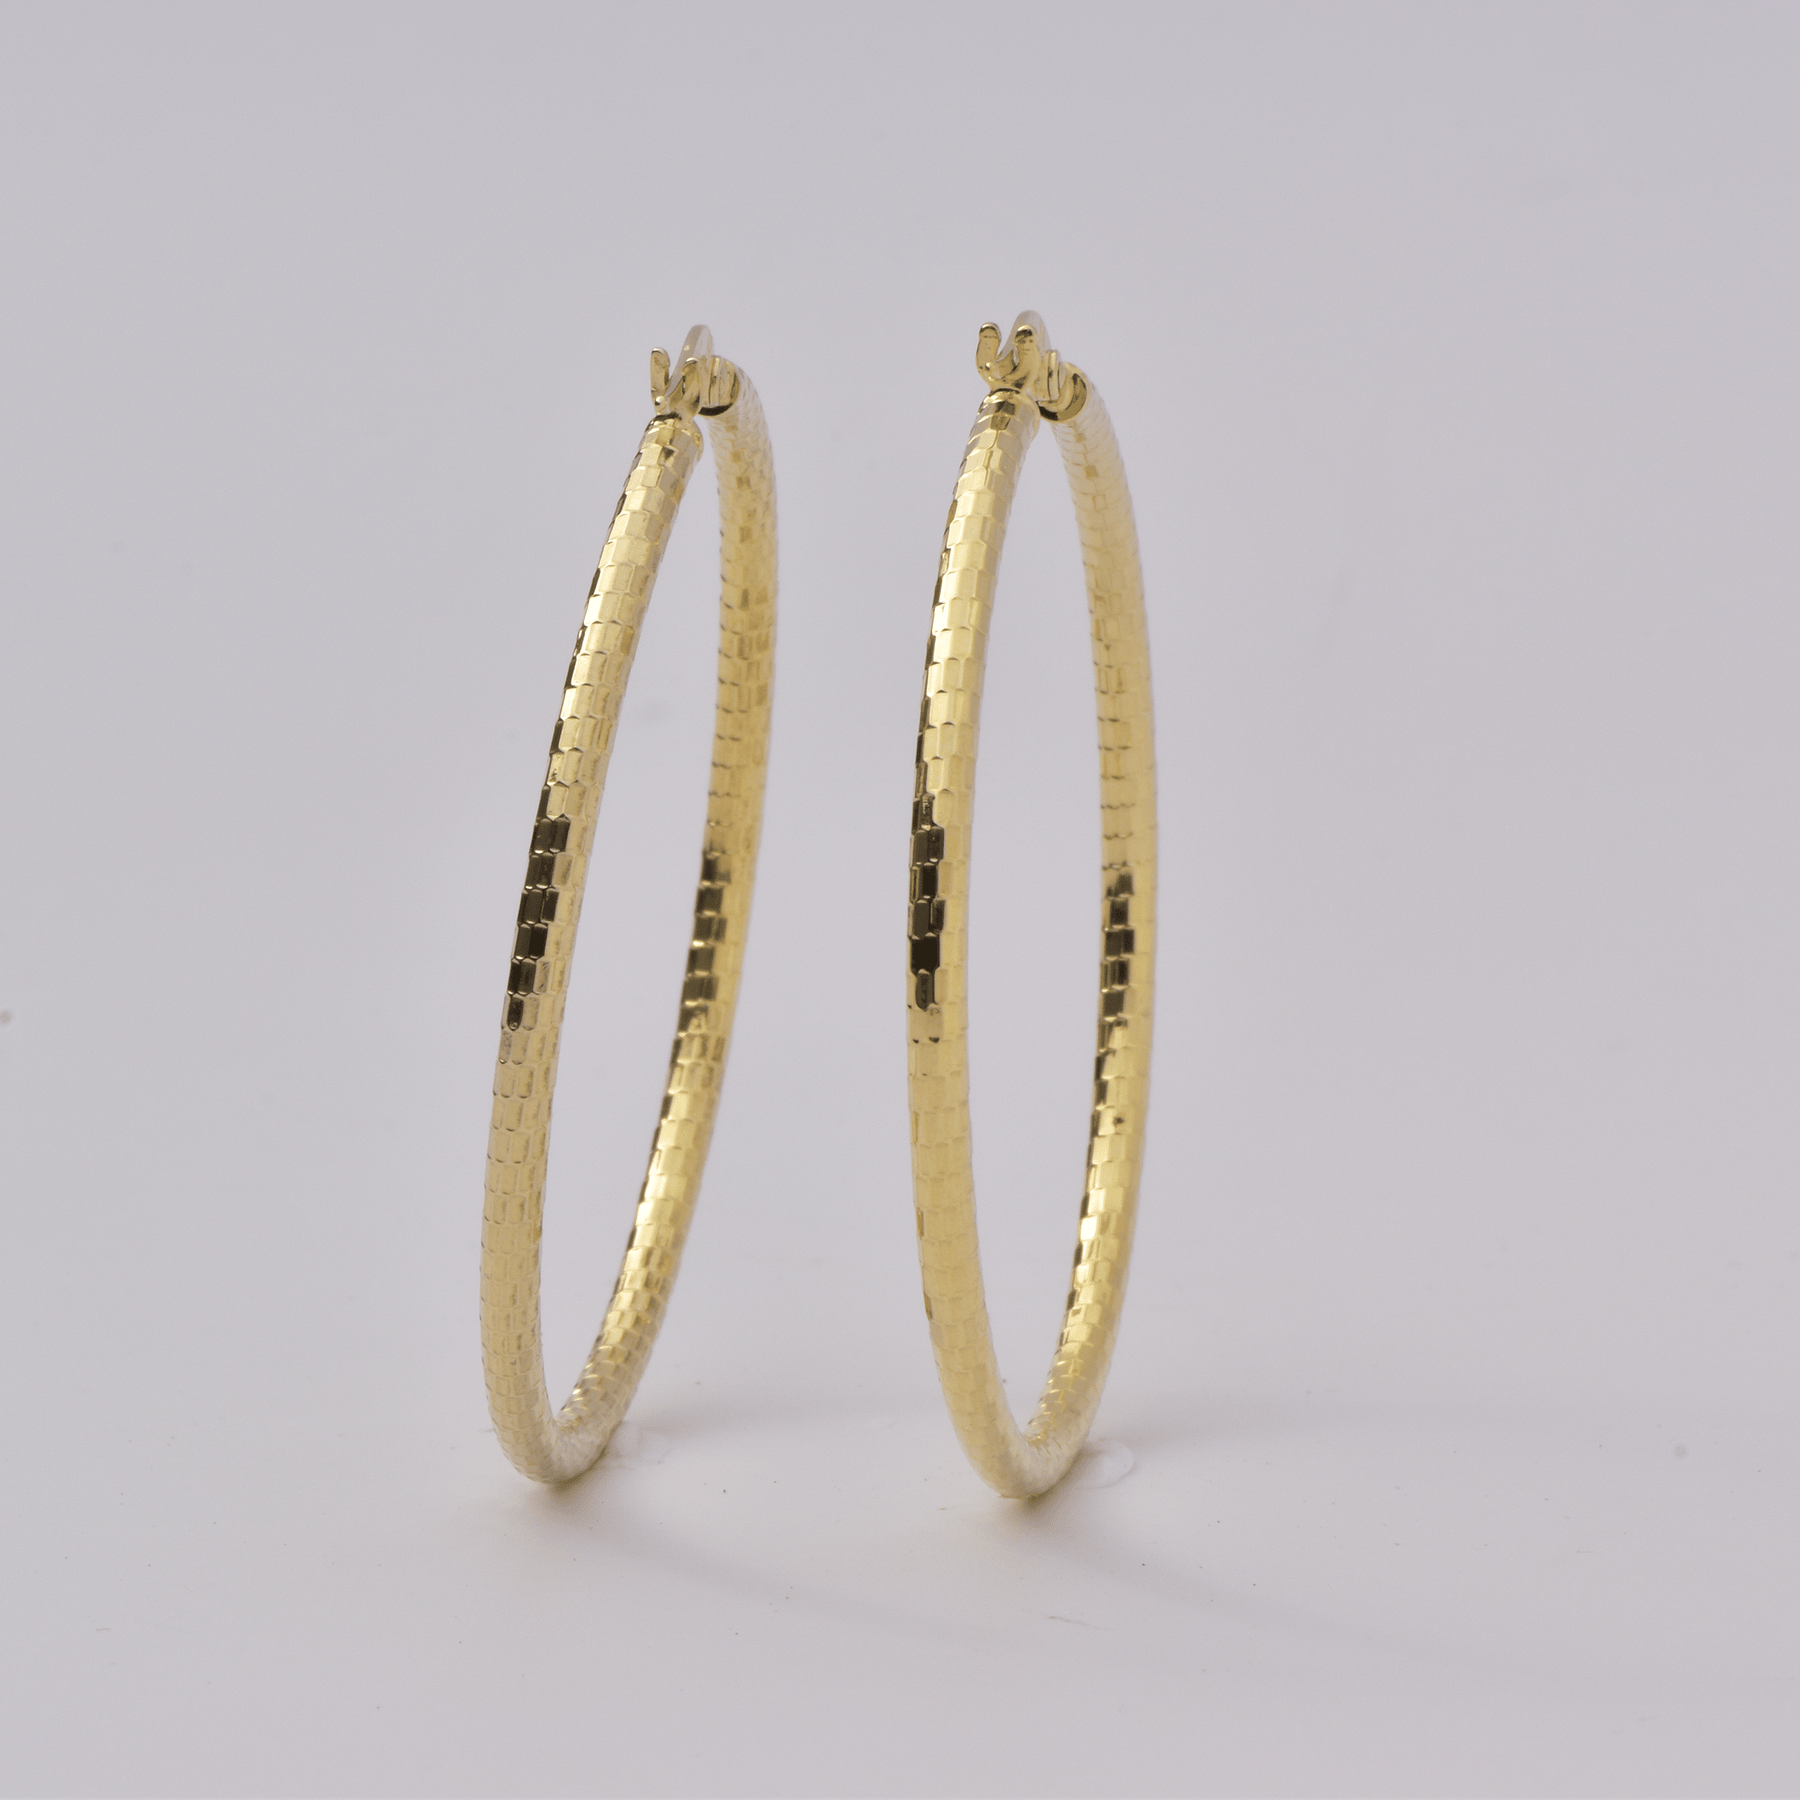 Yellow Gold Hoop Earrings -14-Karat Yellow  Gold, Lightweight diamond Cut Hoops: Bright Hoops